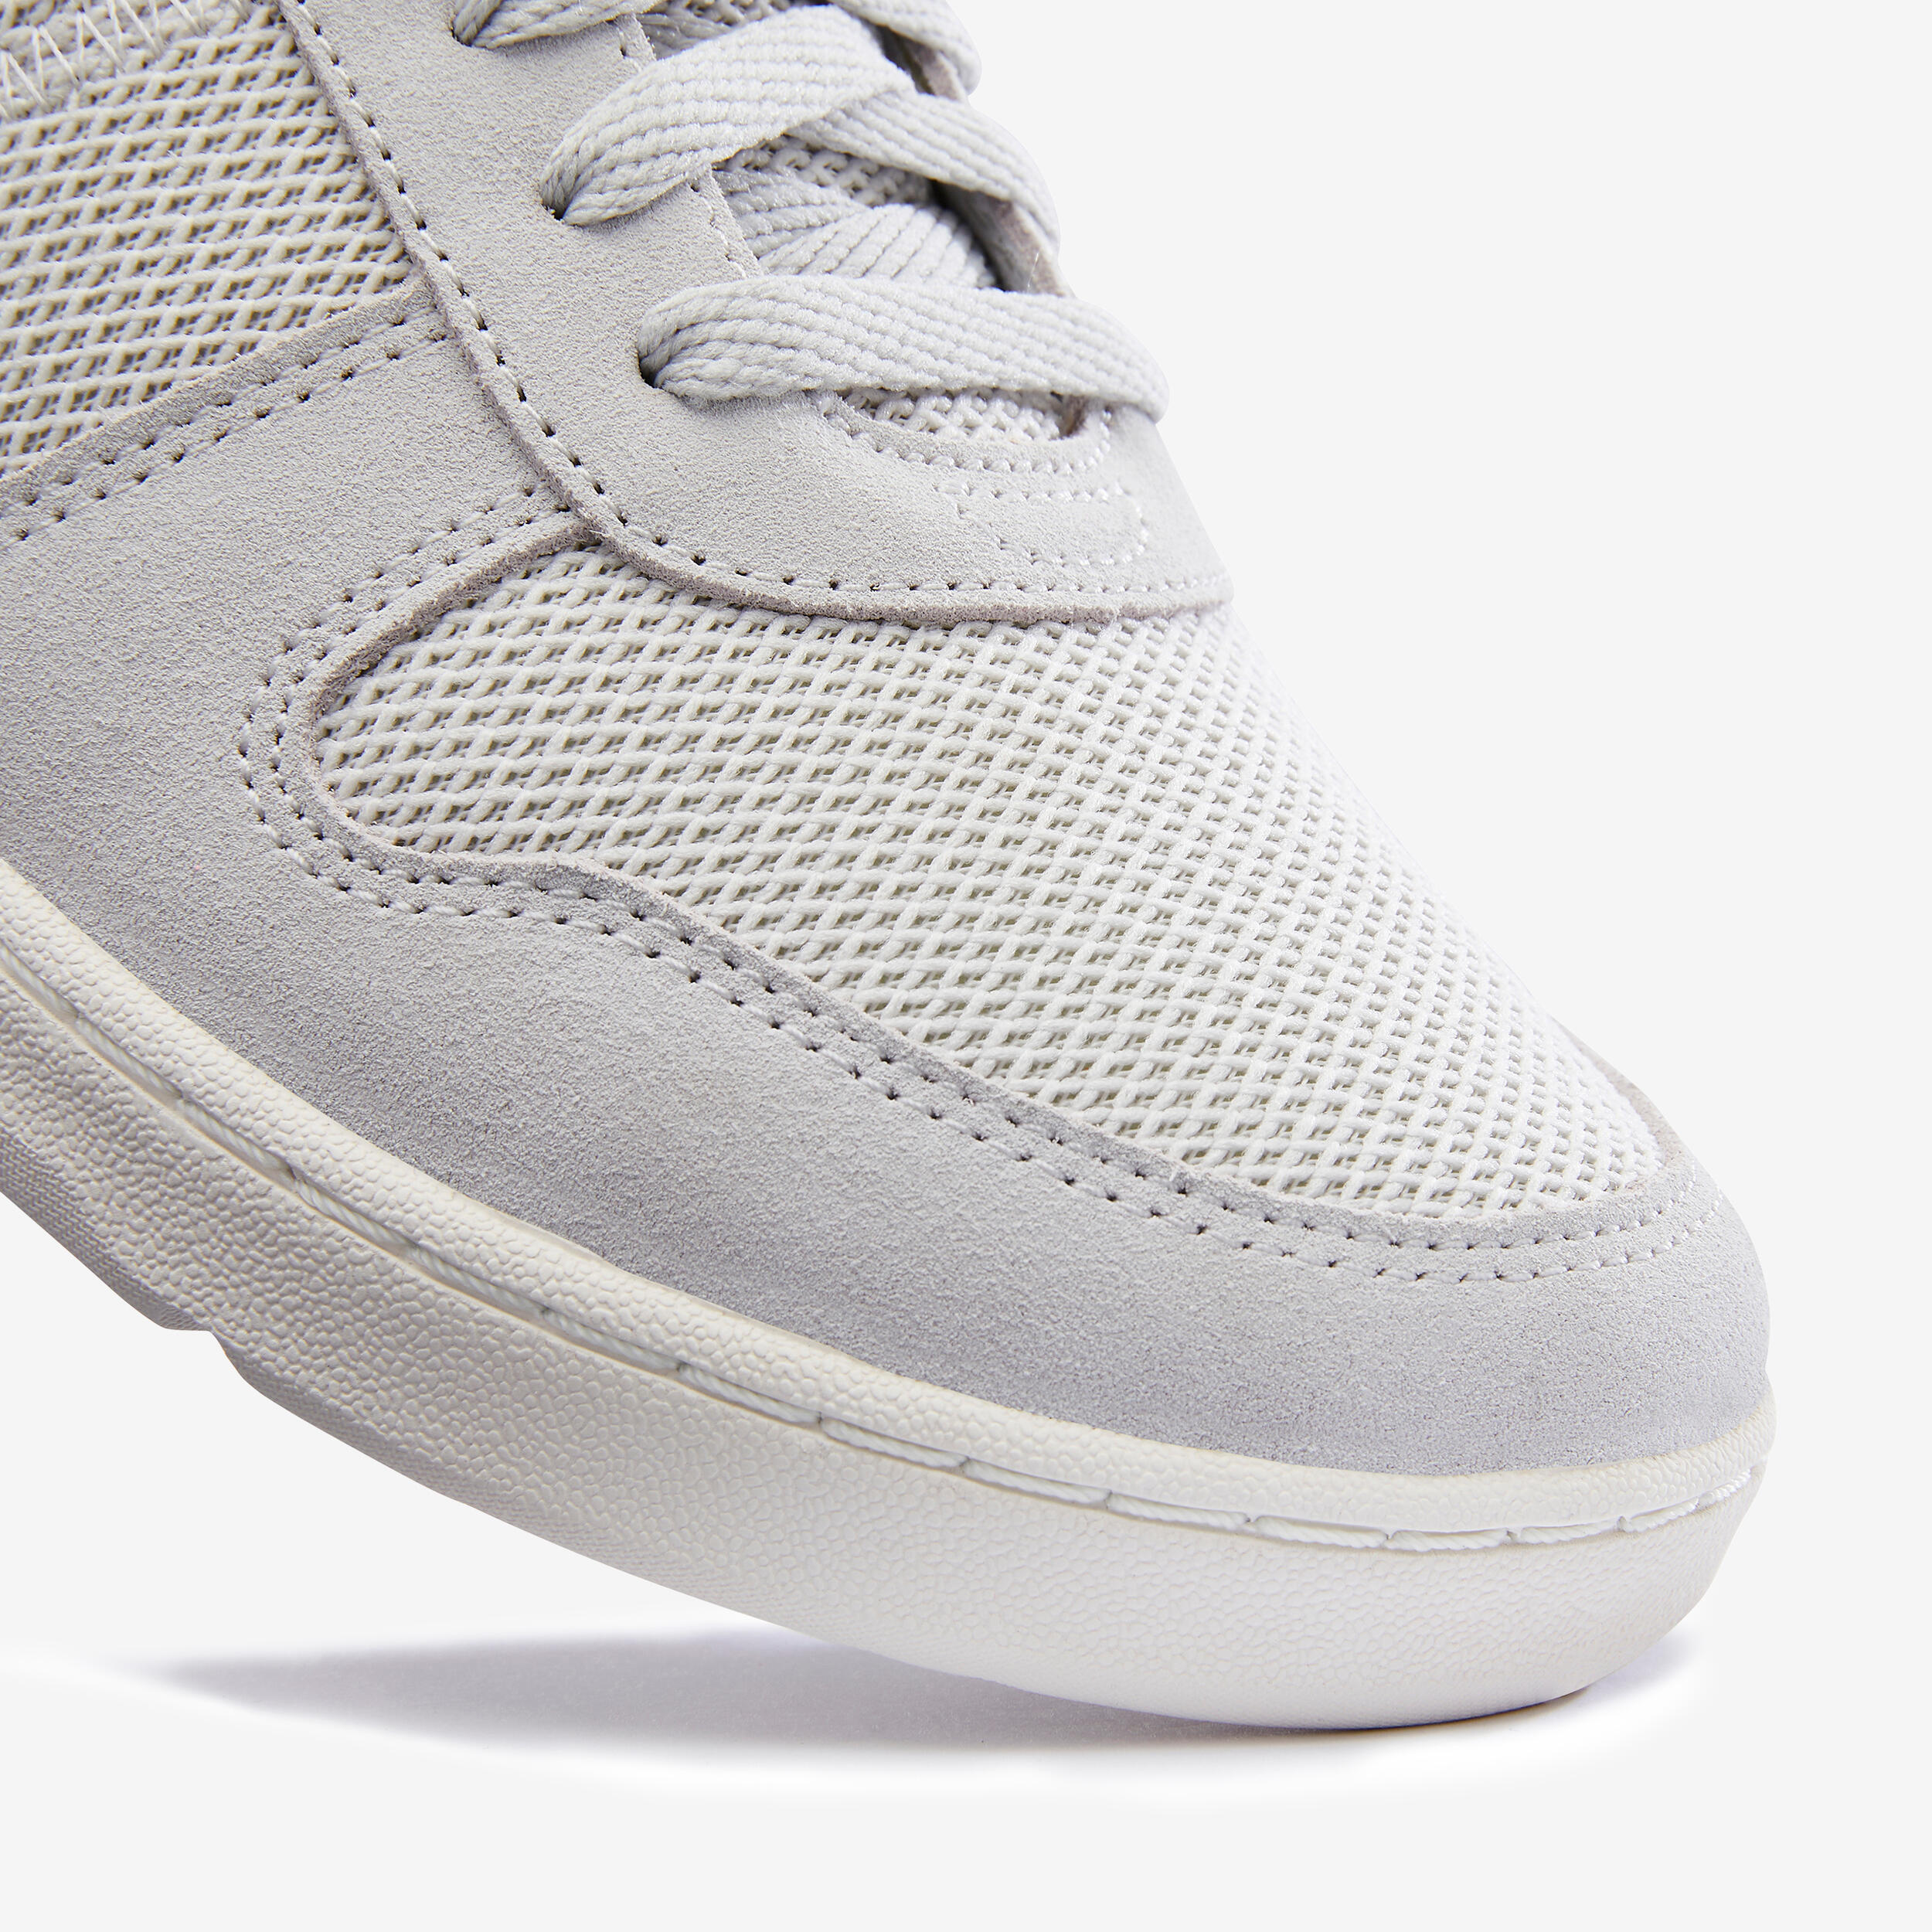 Men's Urban Walking Shoes Walk Protect Mesh - grey 4/8